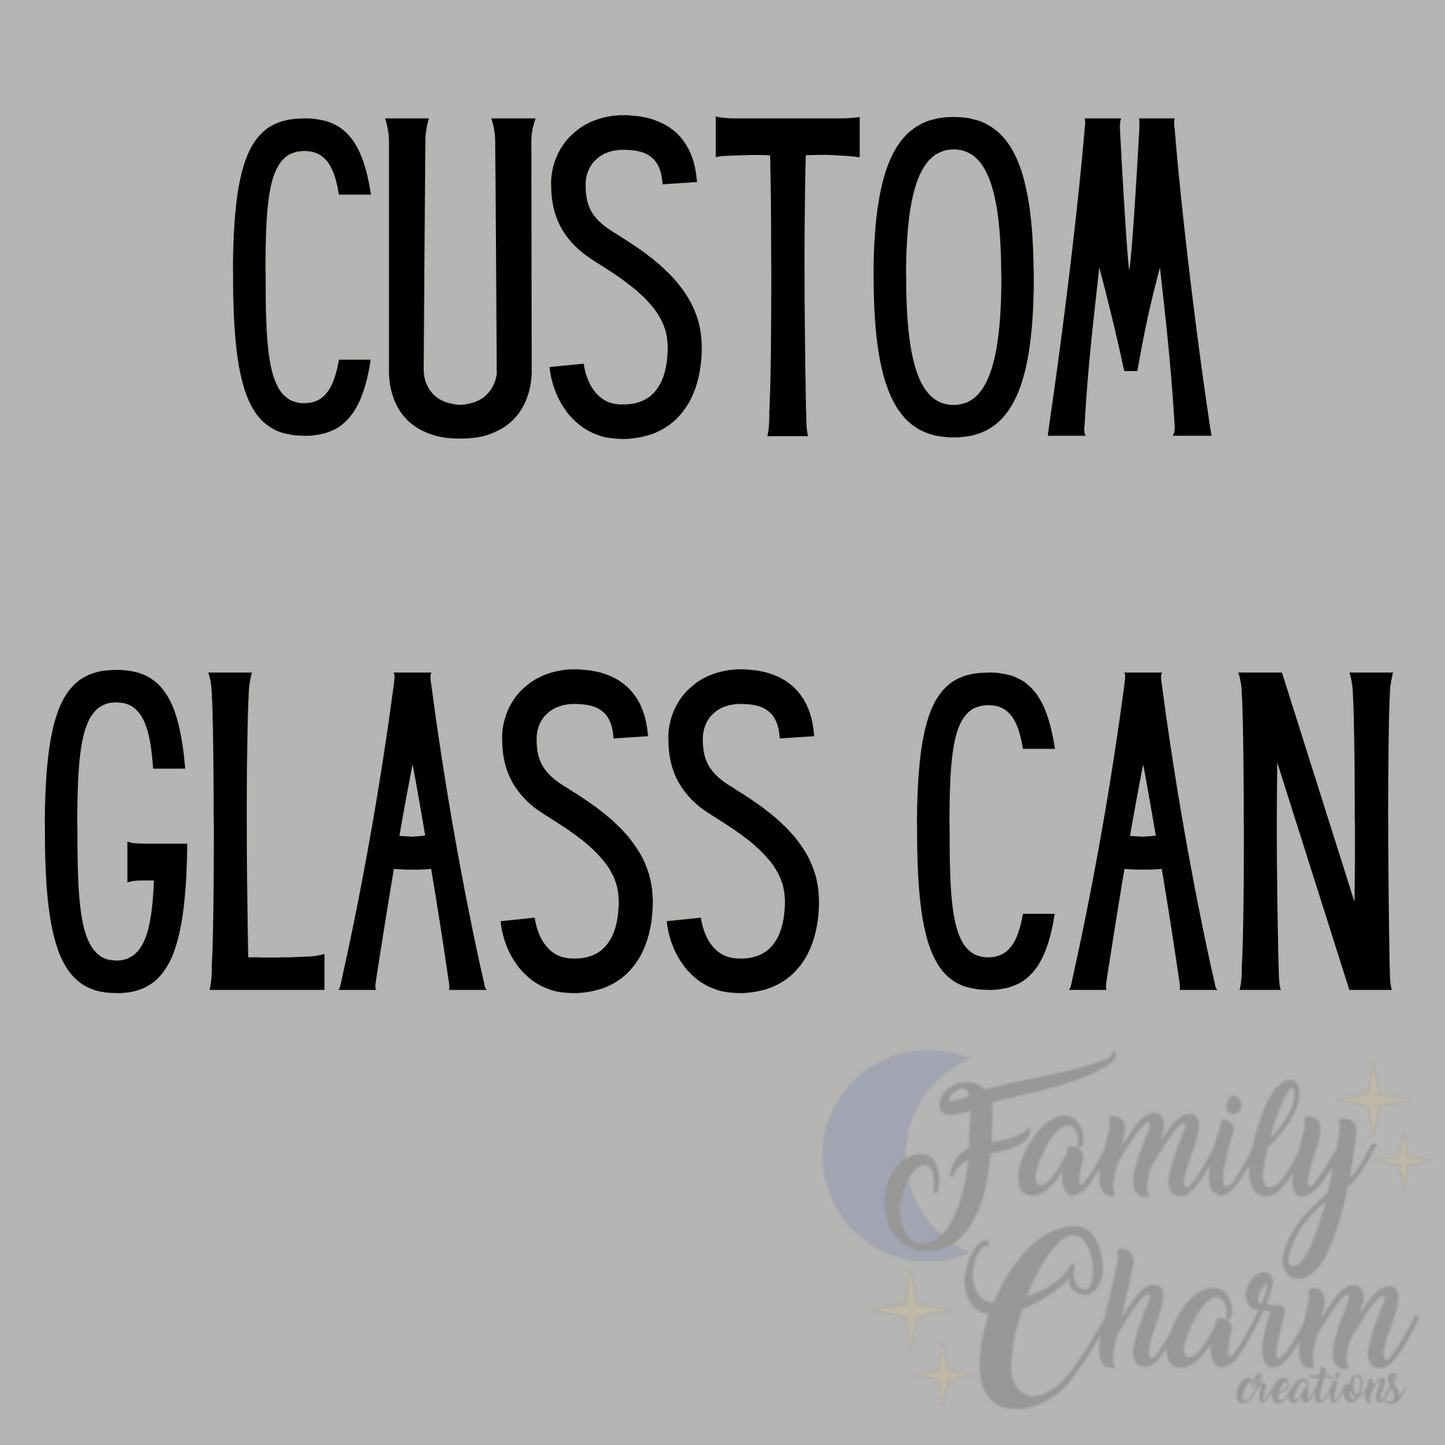 Custom Glass can cup